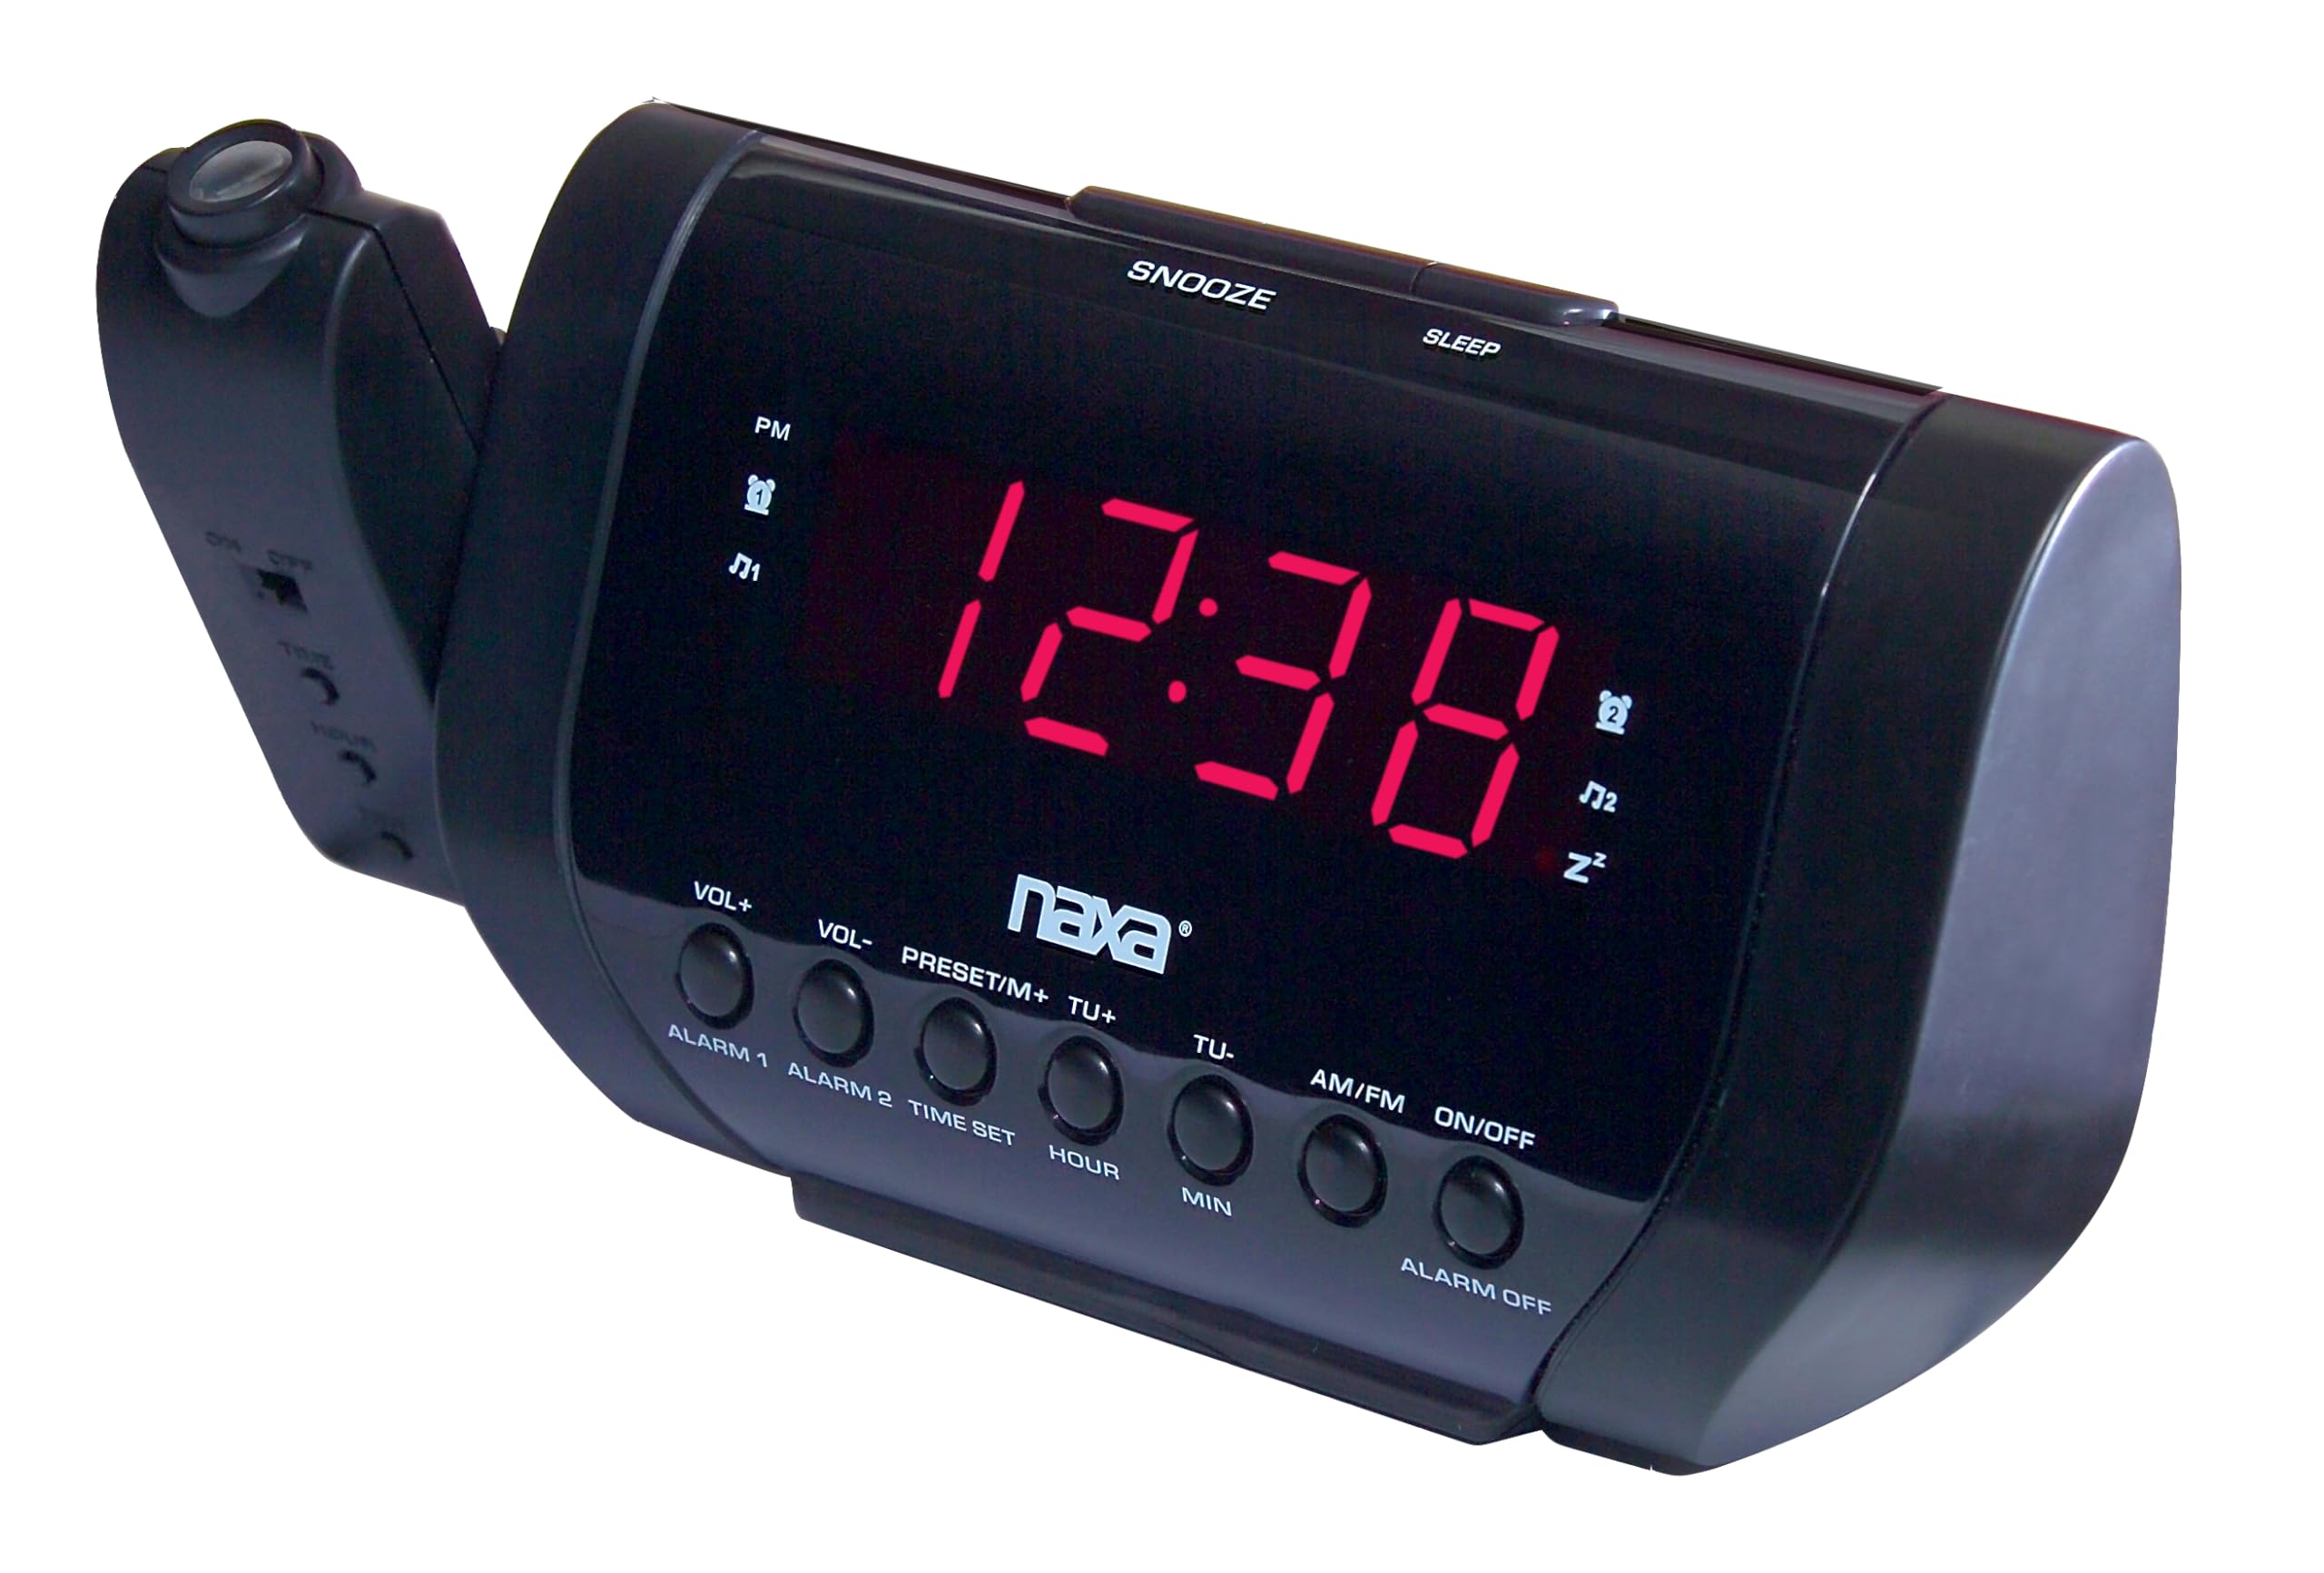 Naxa NRC-173 Projection Dual Alarm Clock  - Very Good